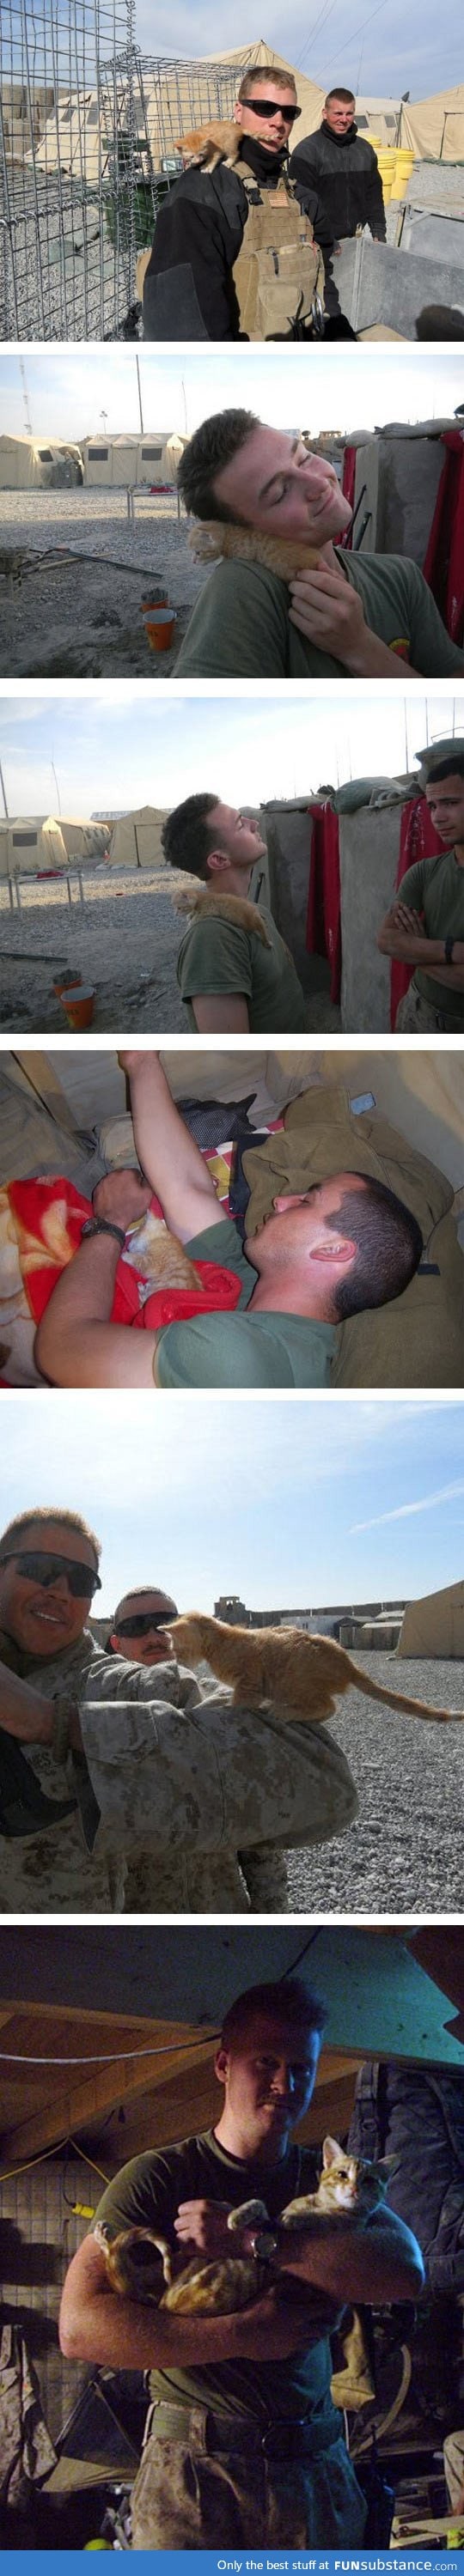 Us marine rescues kitty in afghanistan